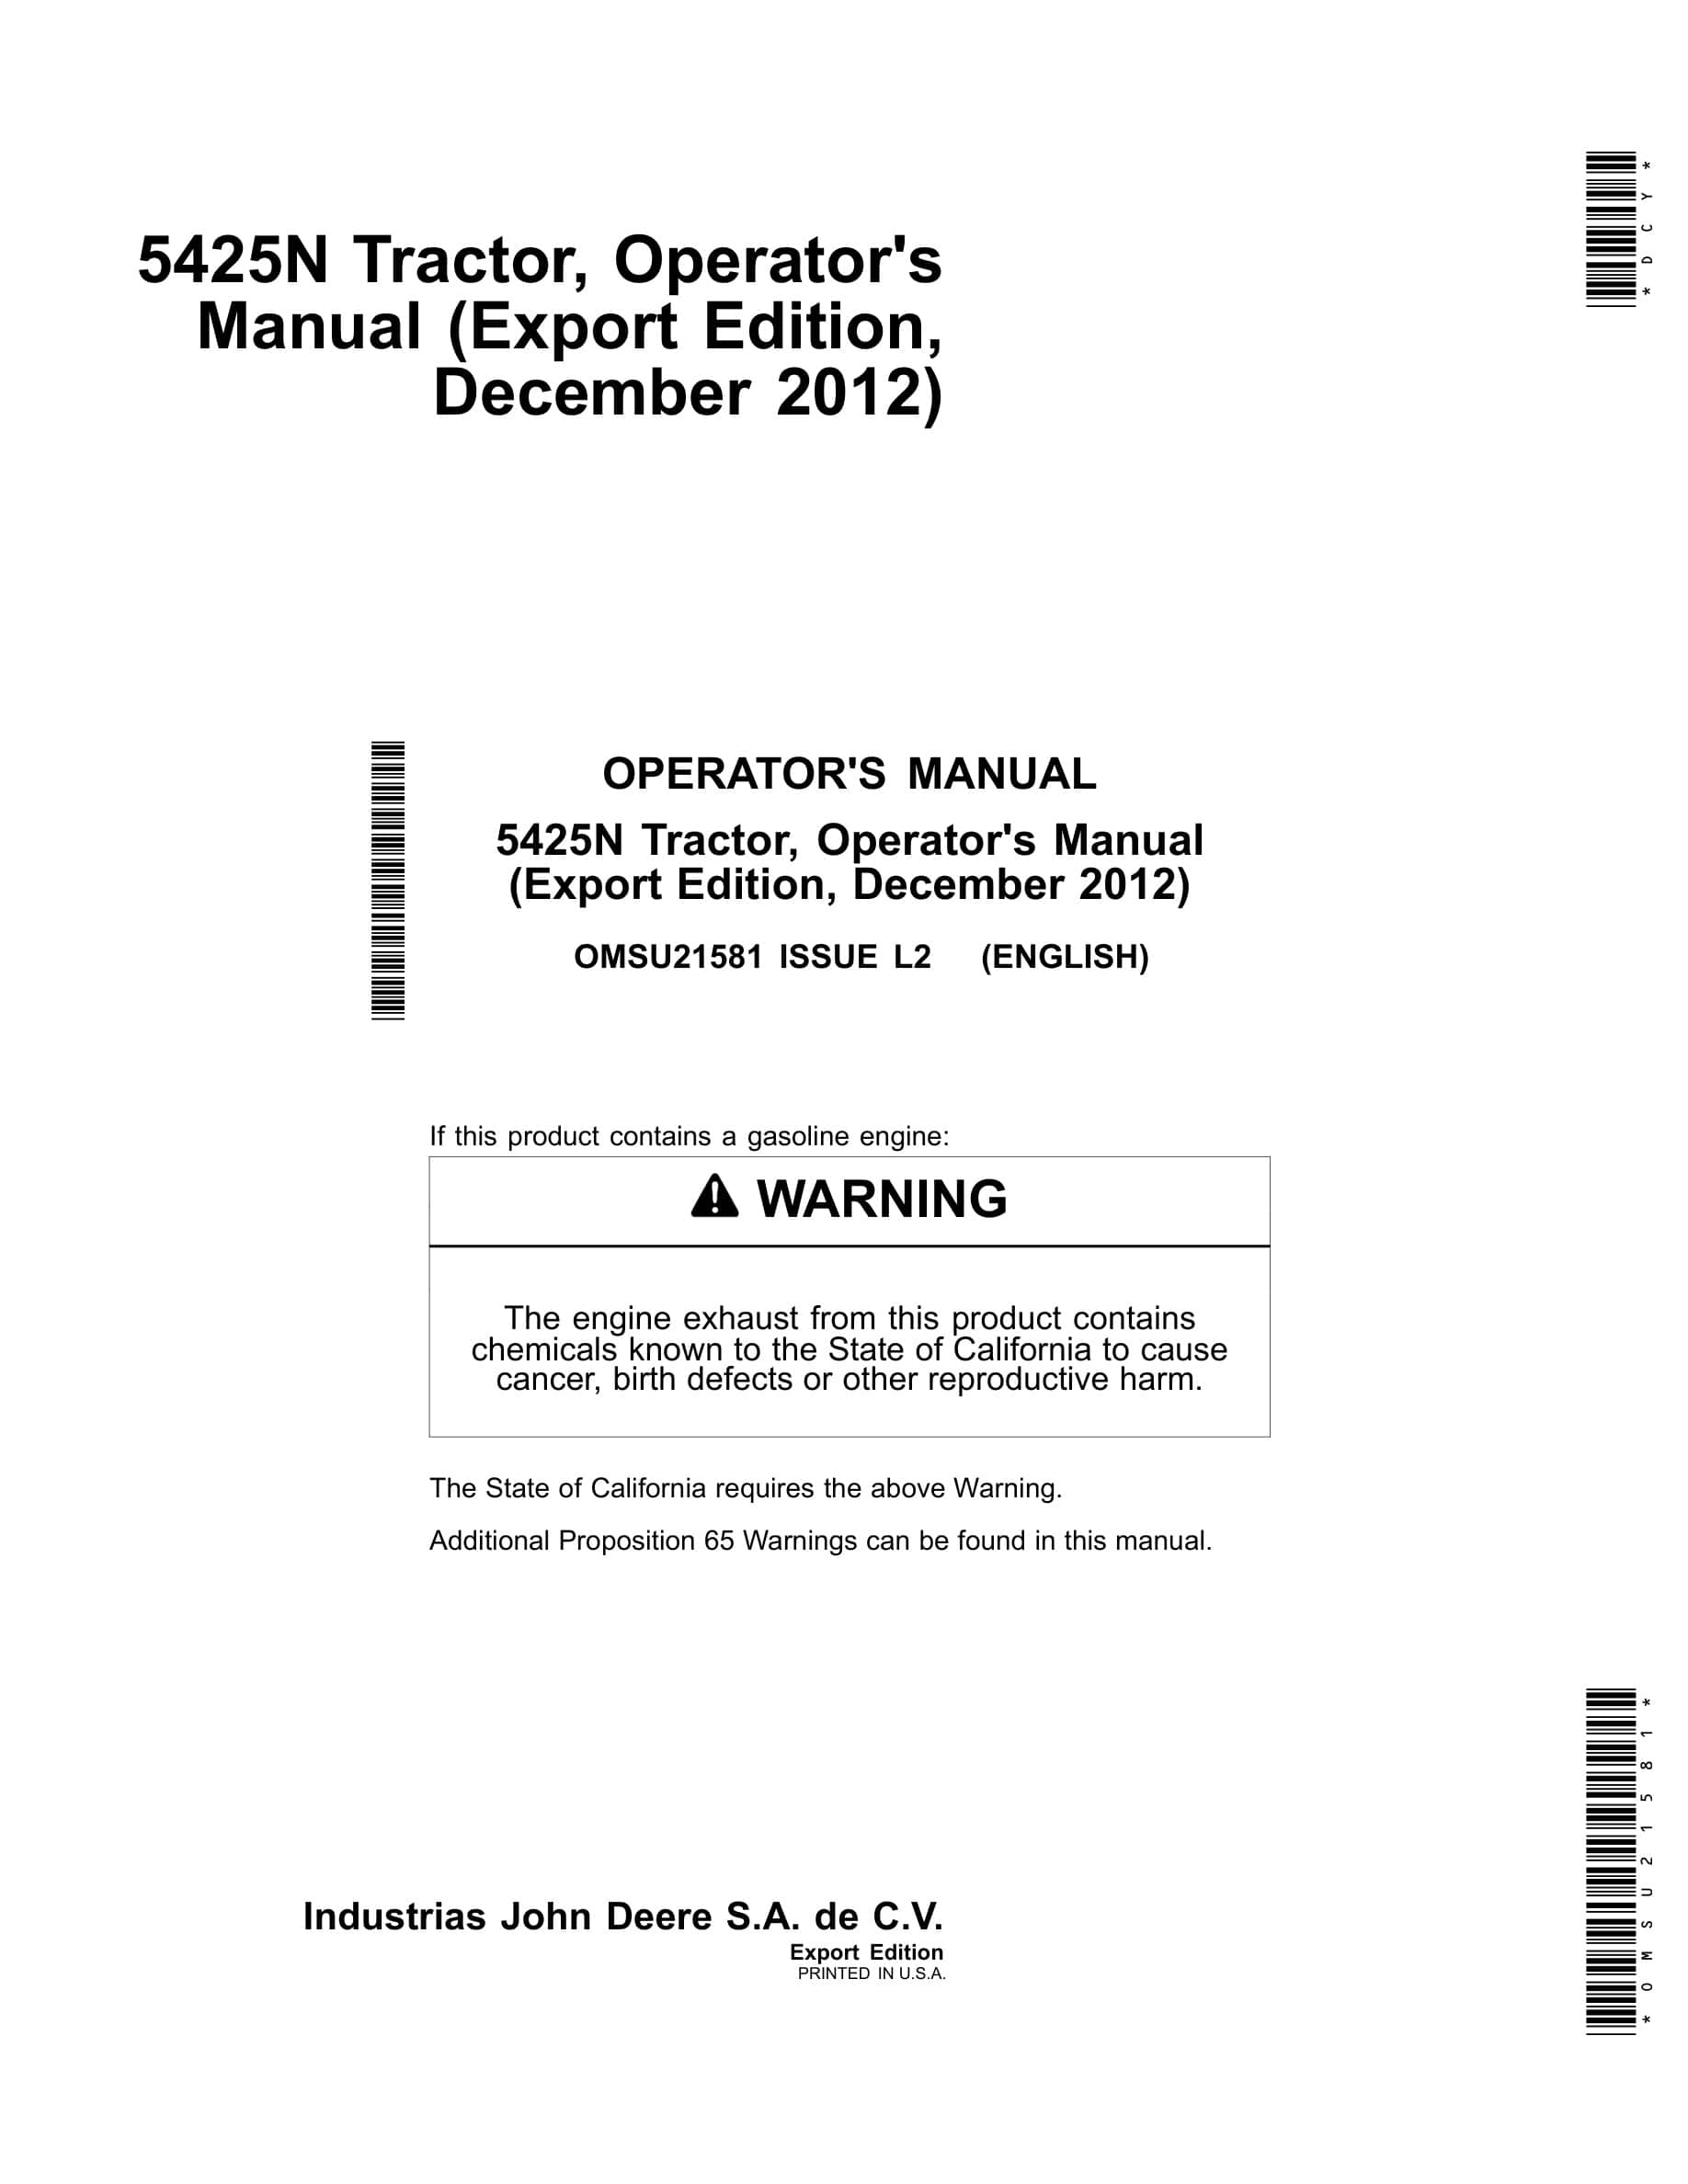 John Deere 5425n Tractors Operator Manual OMSU21581-1